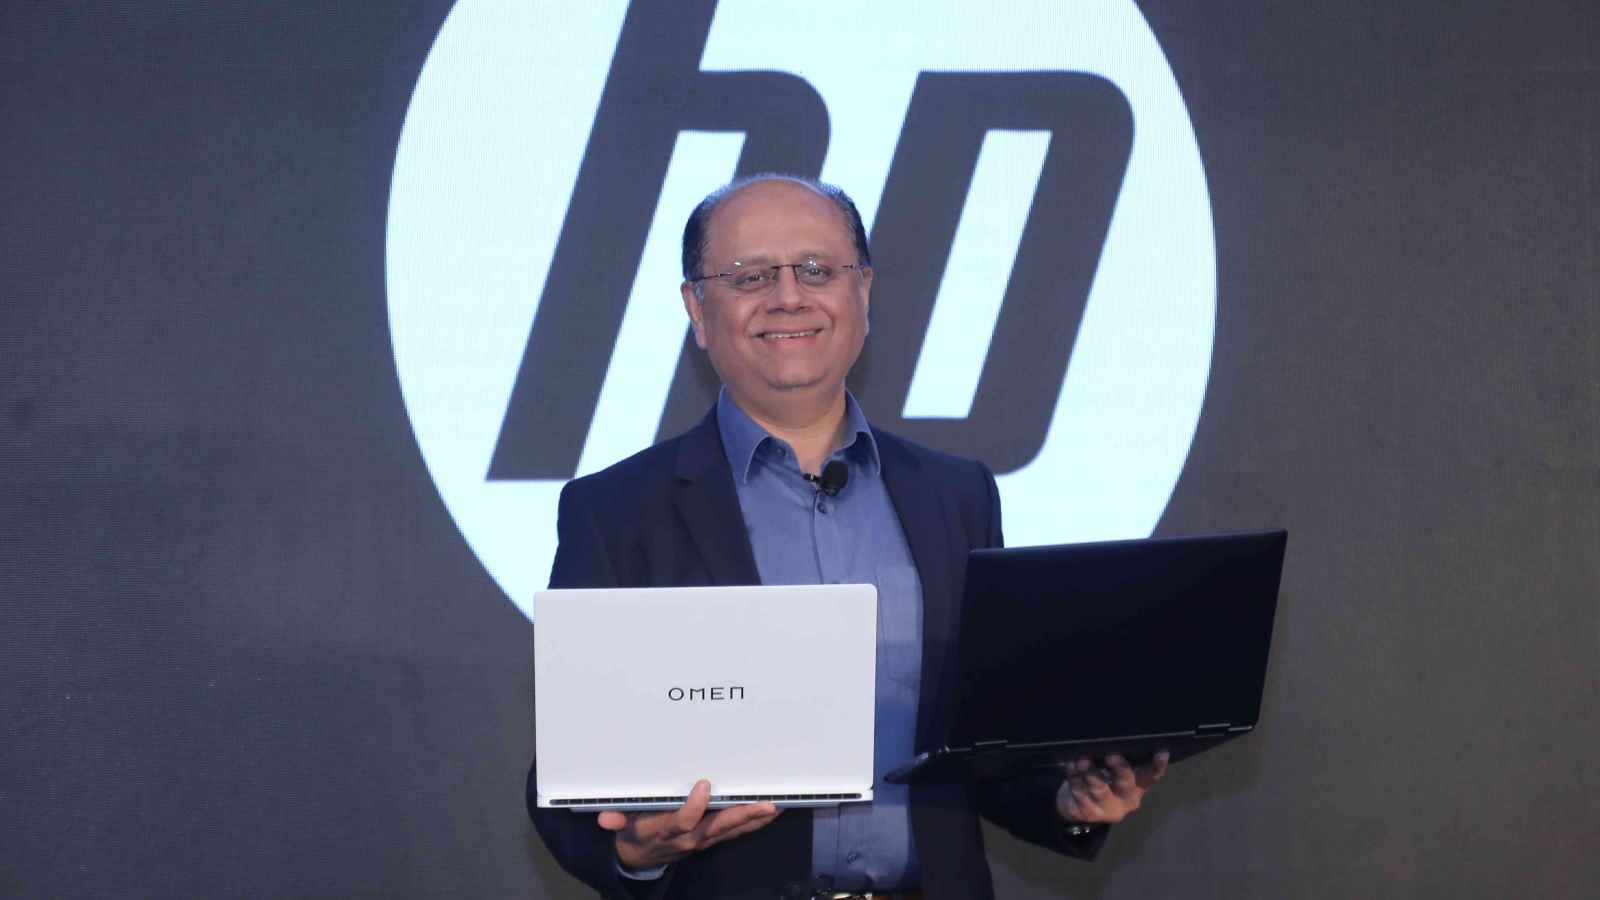 Upcoming AI-enhanced PCs will cut across consumer segments: HP India’s Vineet Gehani